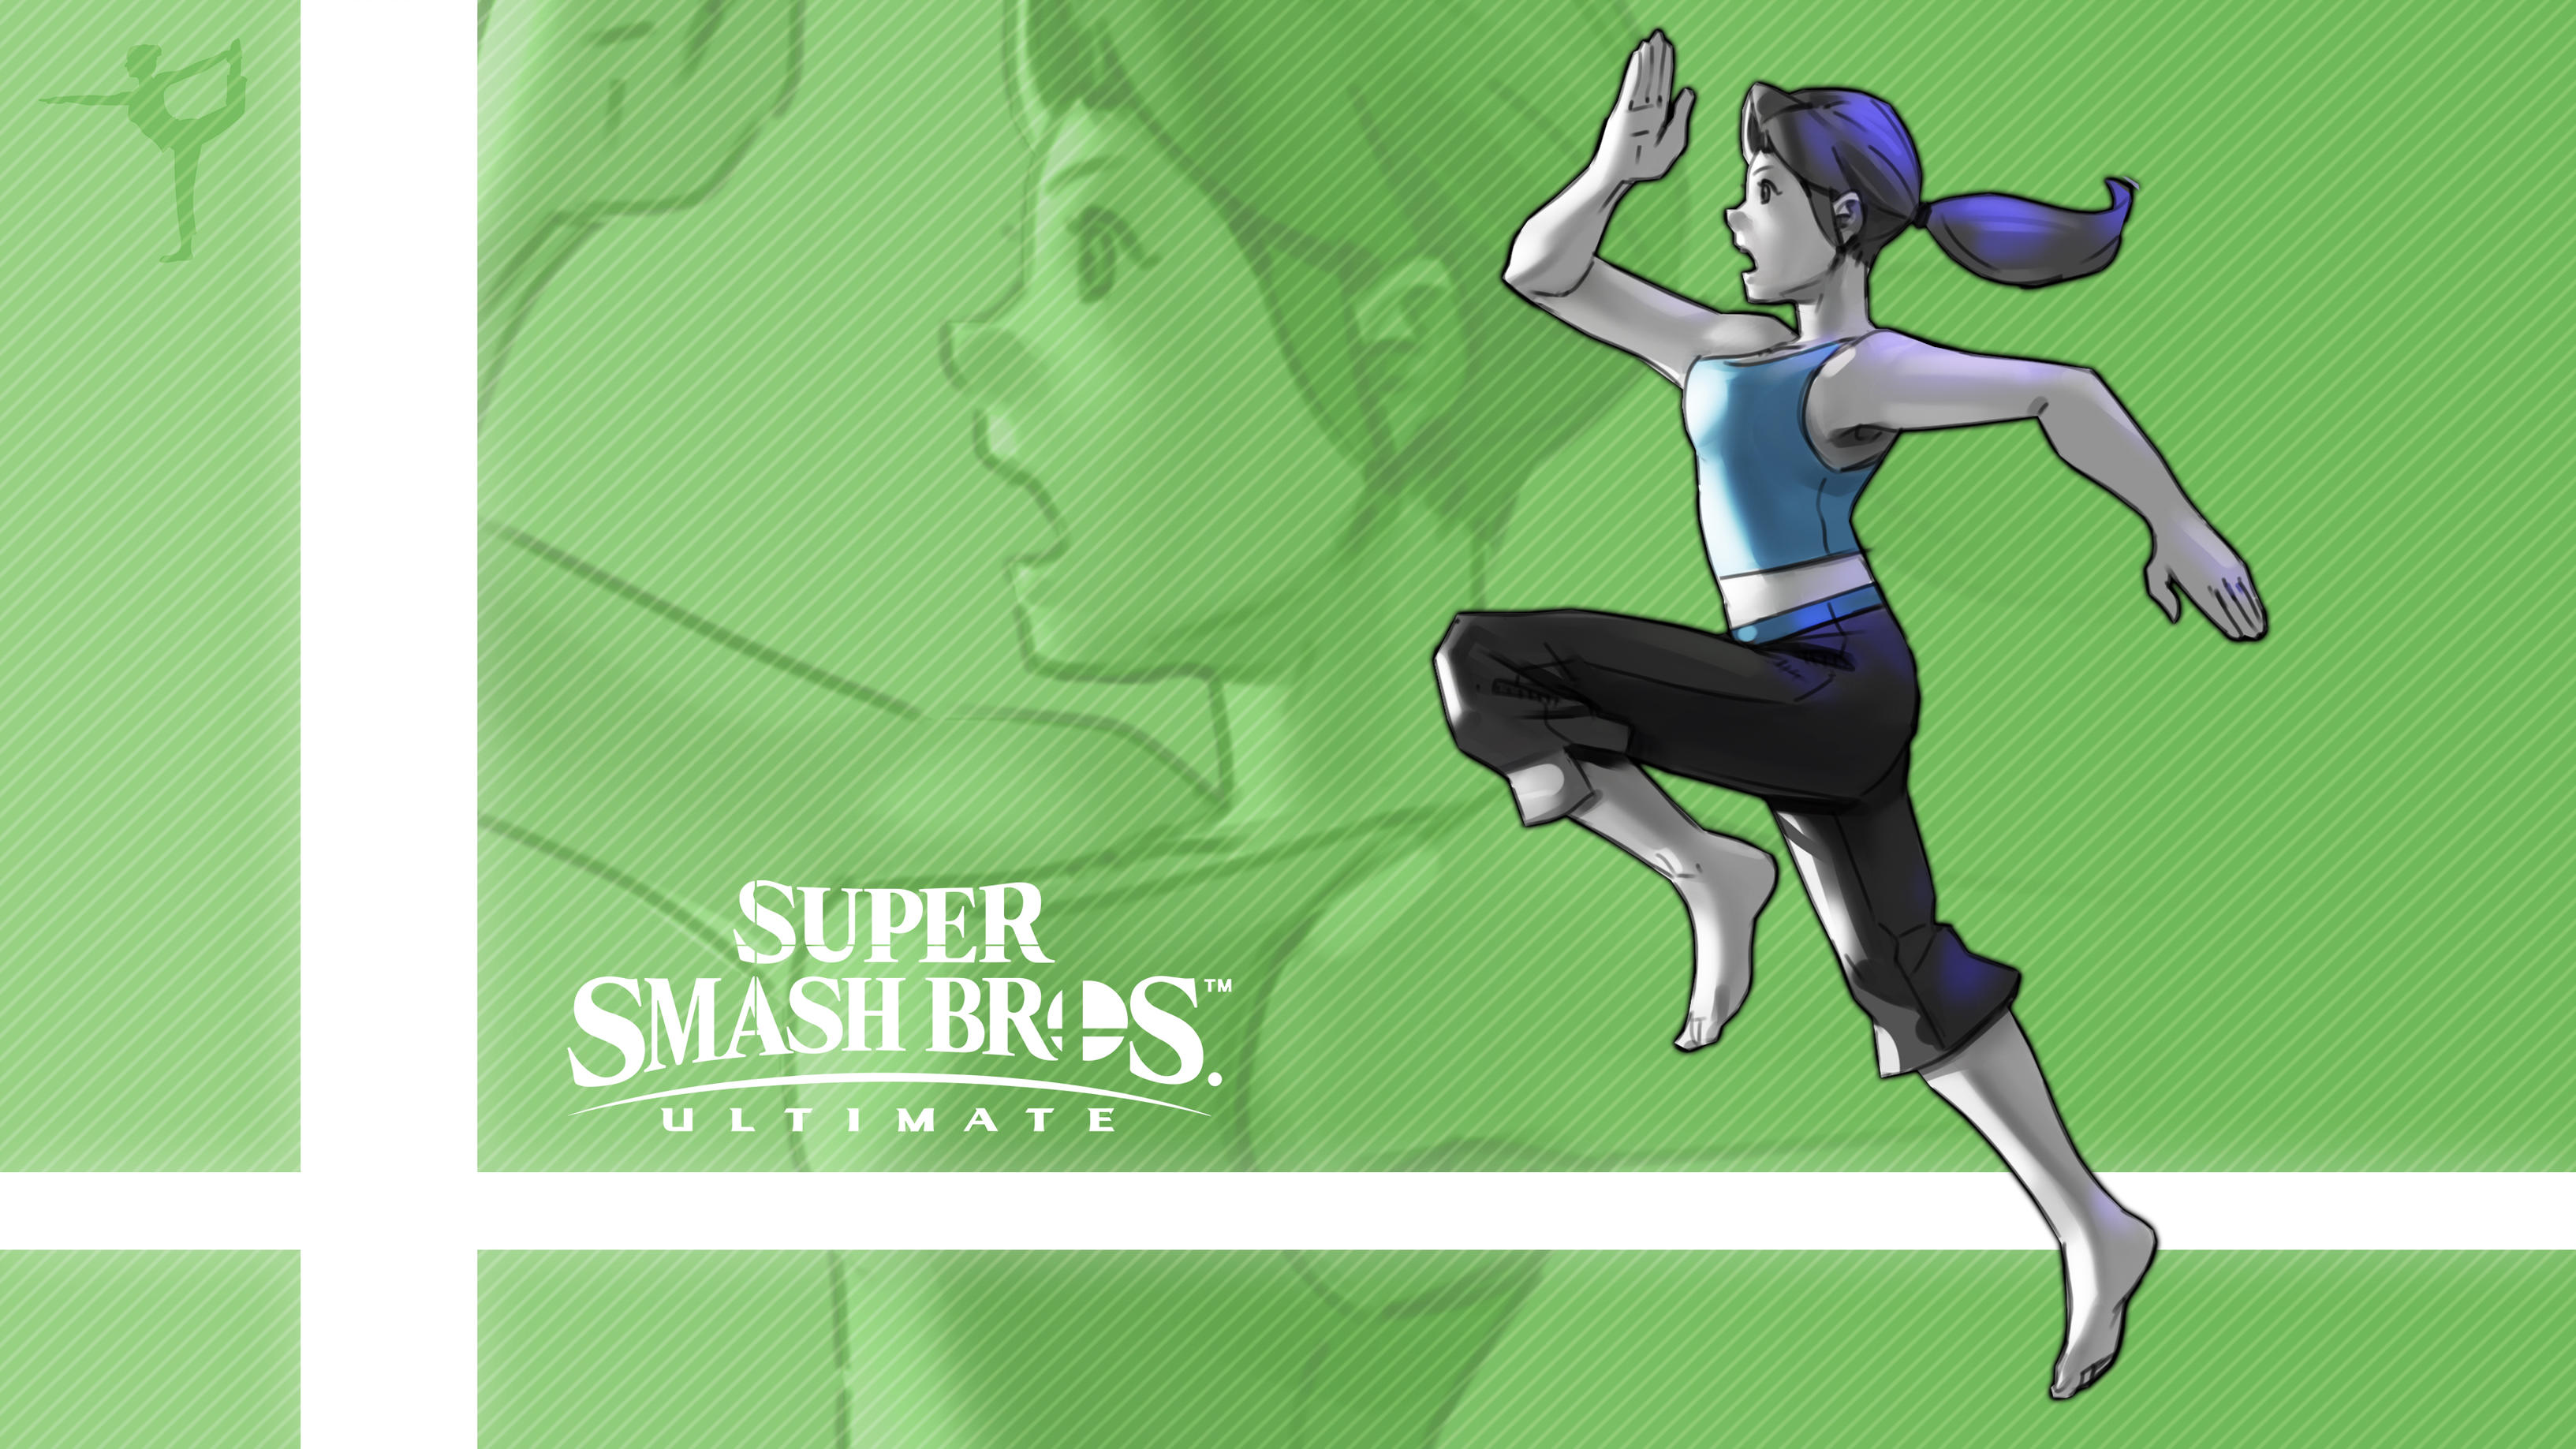 Female Wii Fit Trainer In Super Smash Bros. Ultimate by Callum Nakajima